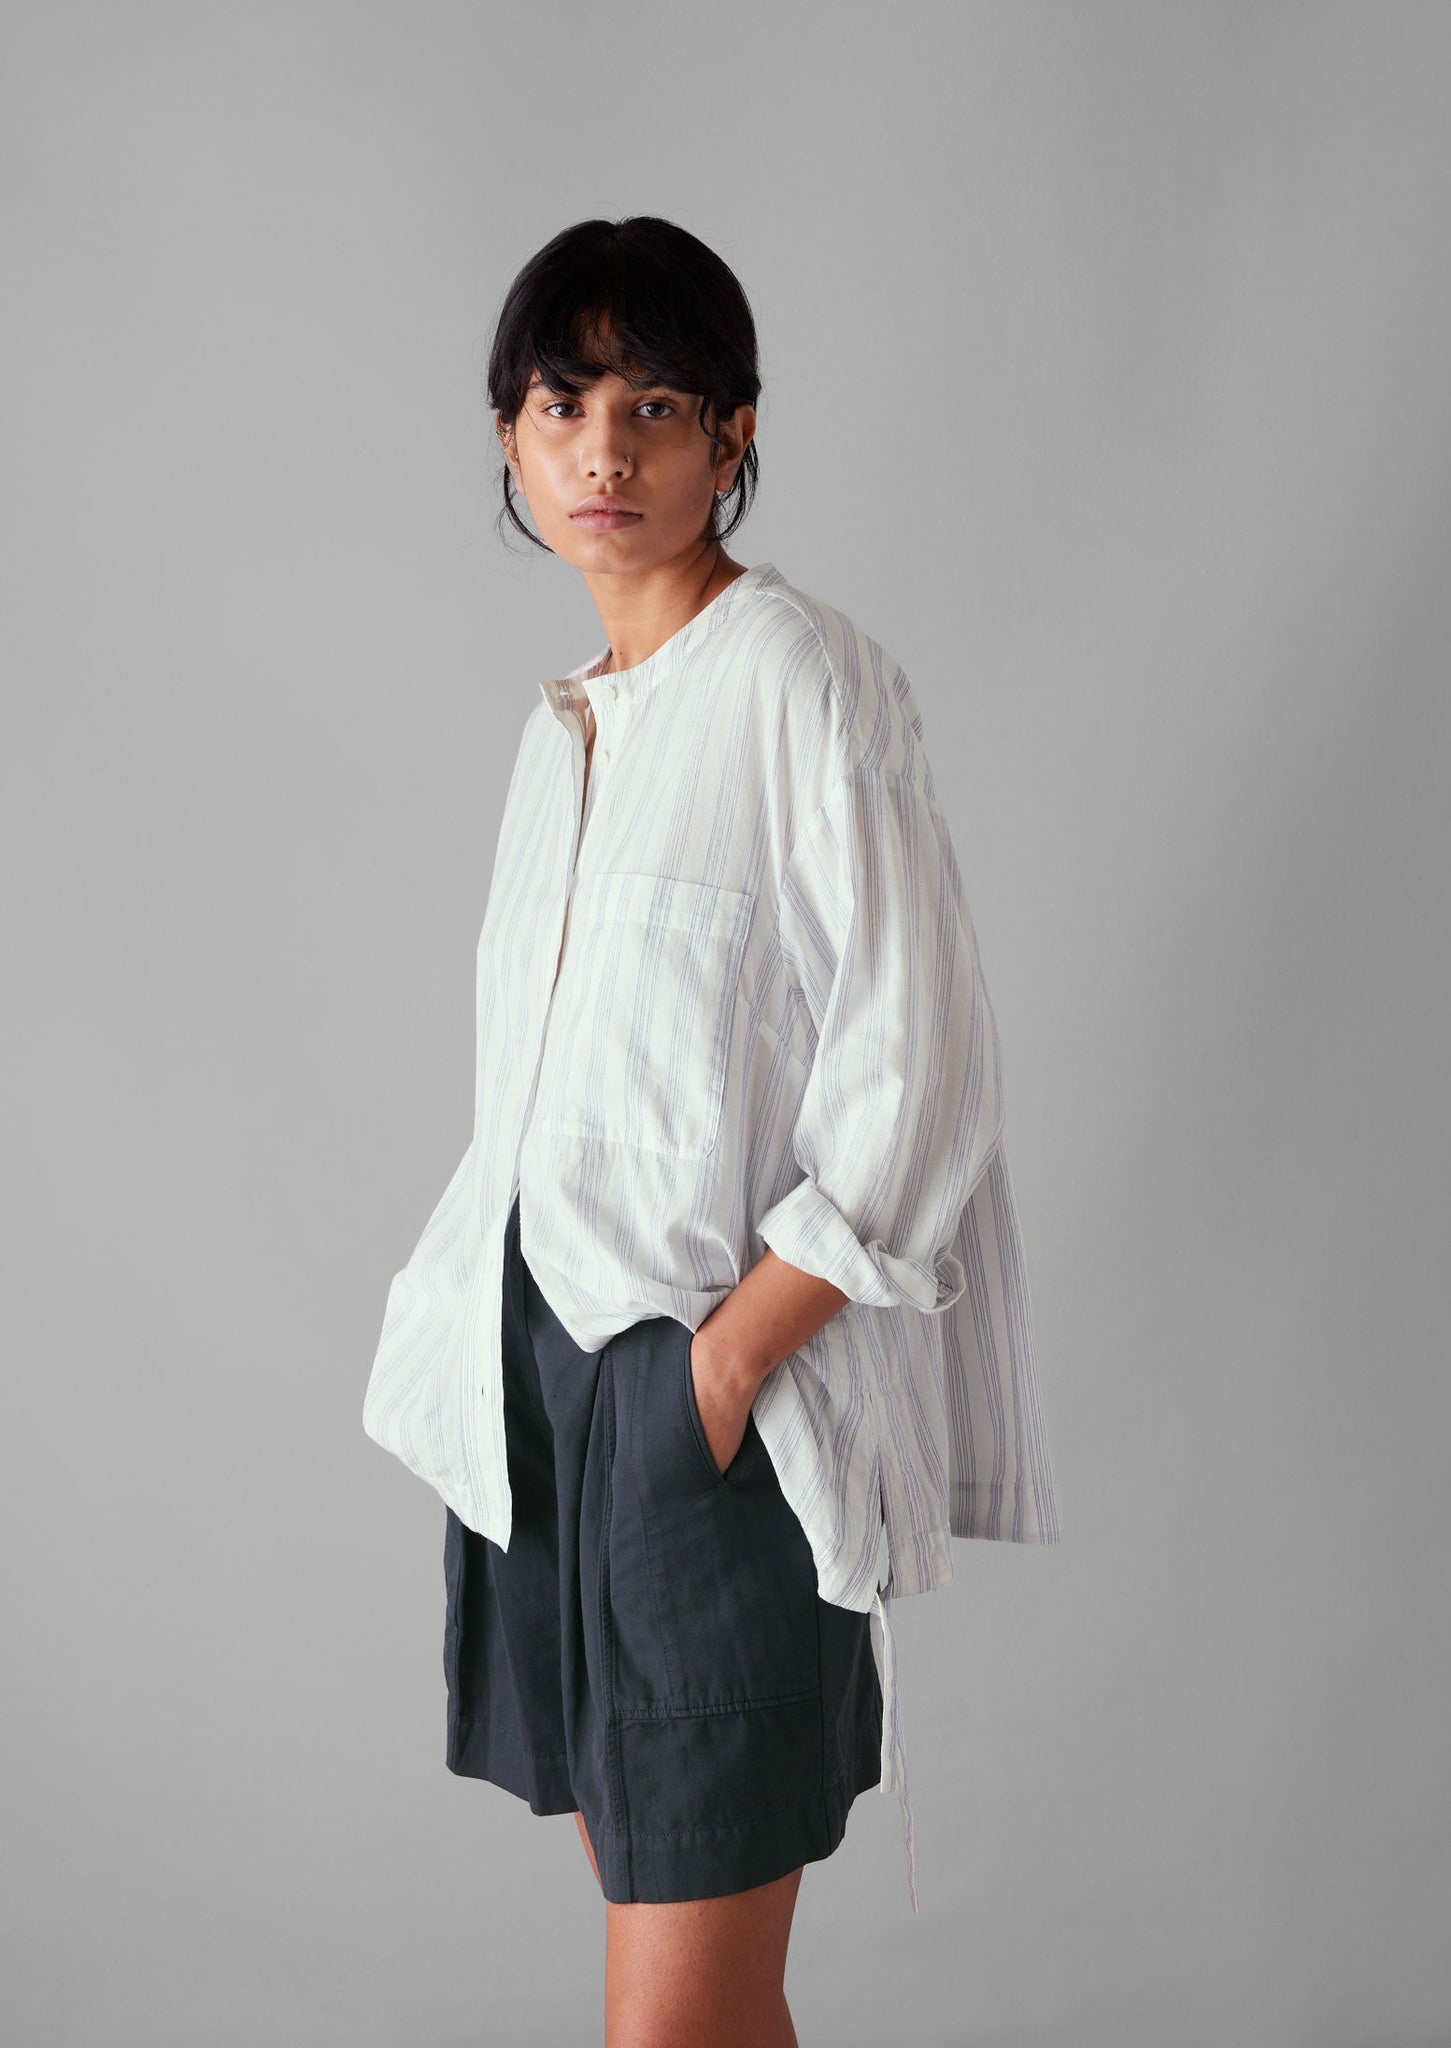 Pleated Cotton Linen Twill Shorts | Slate Navy